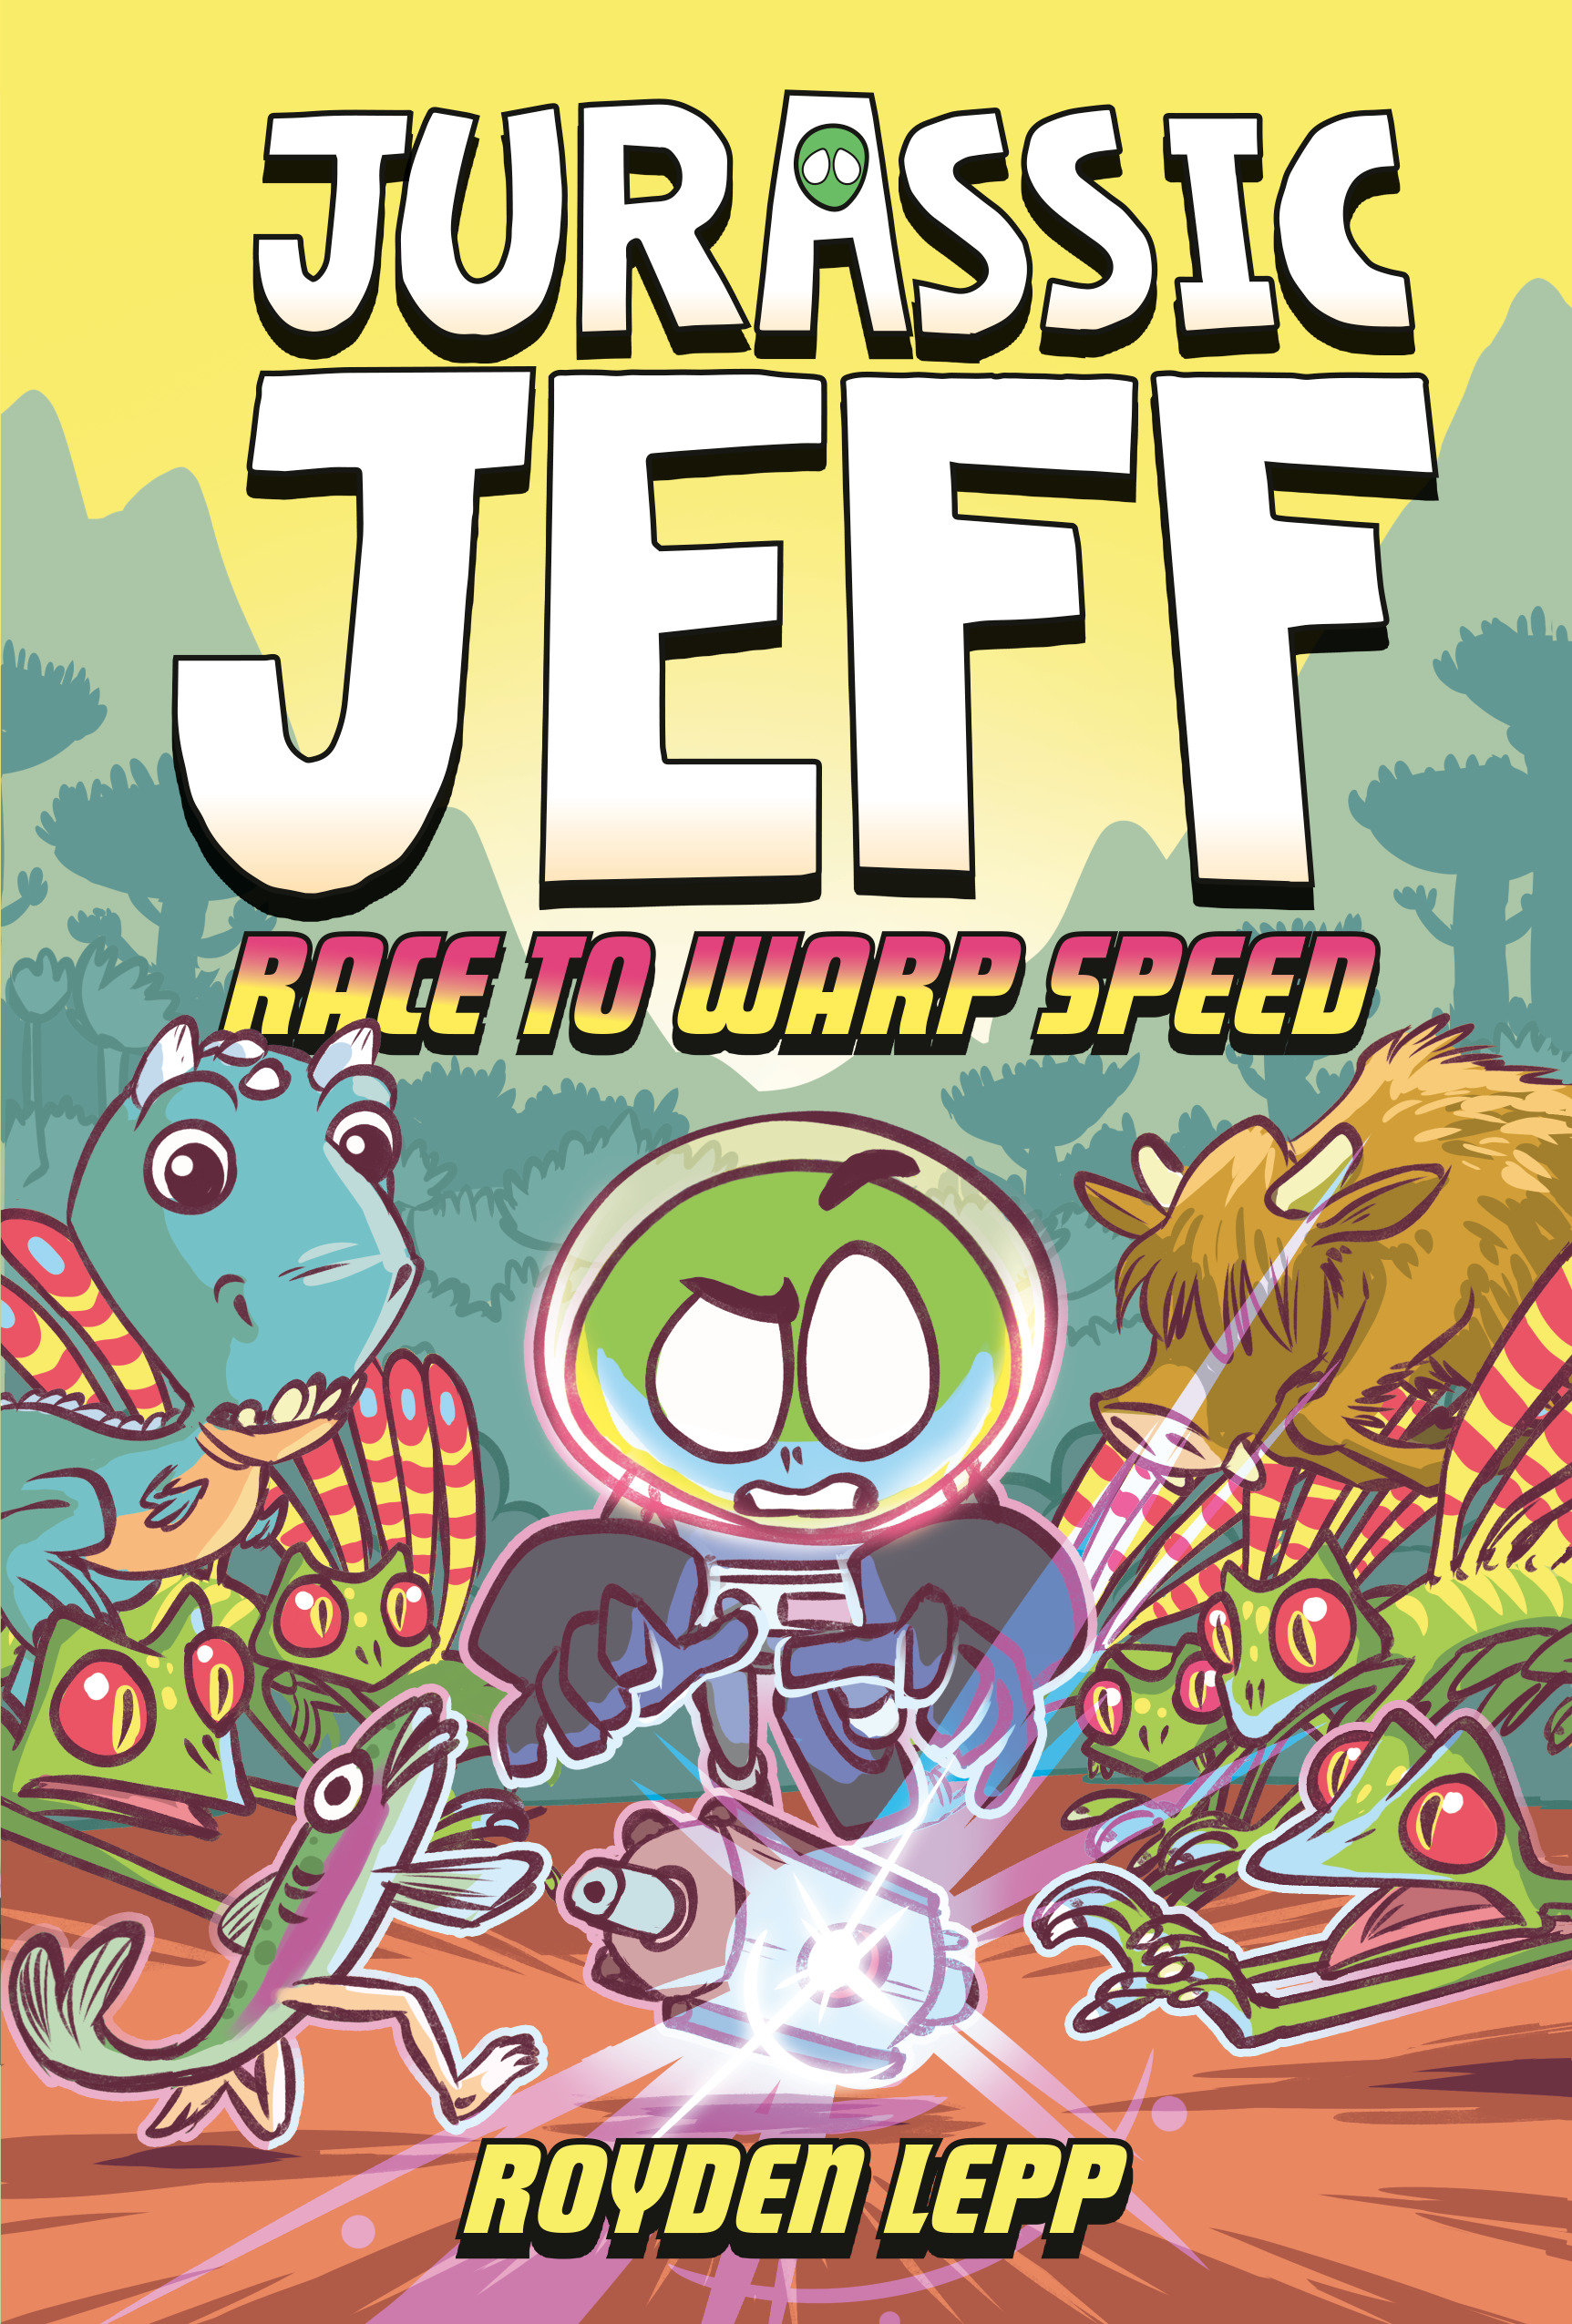 Jurassic Jeff Hardcover Graphic Novel Volume 2 Race To Warp Speed